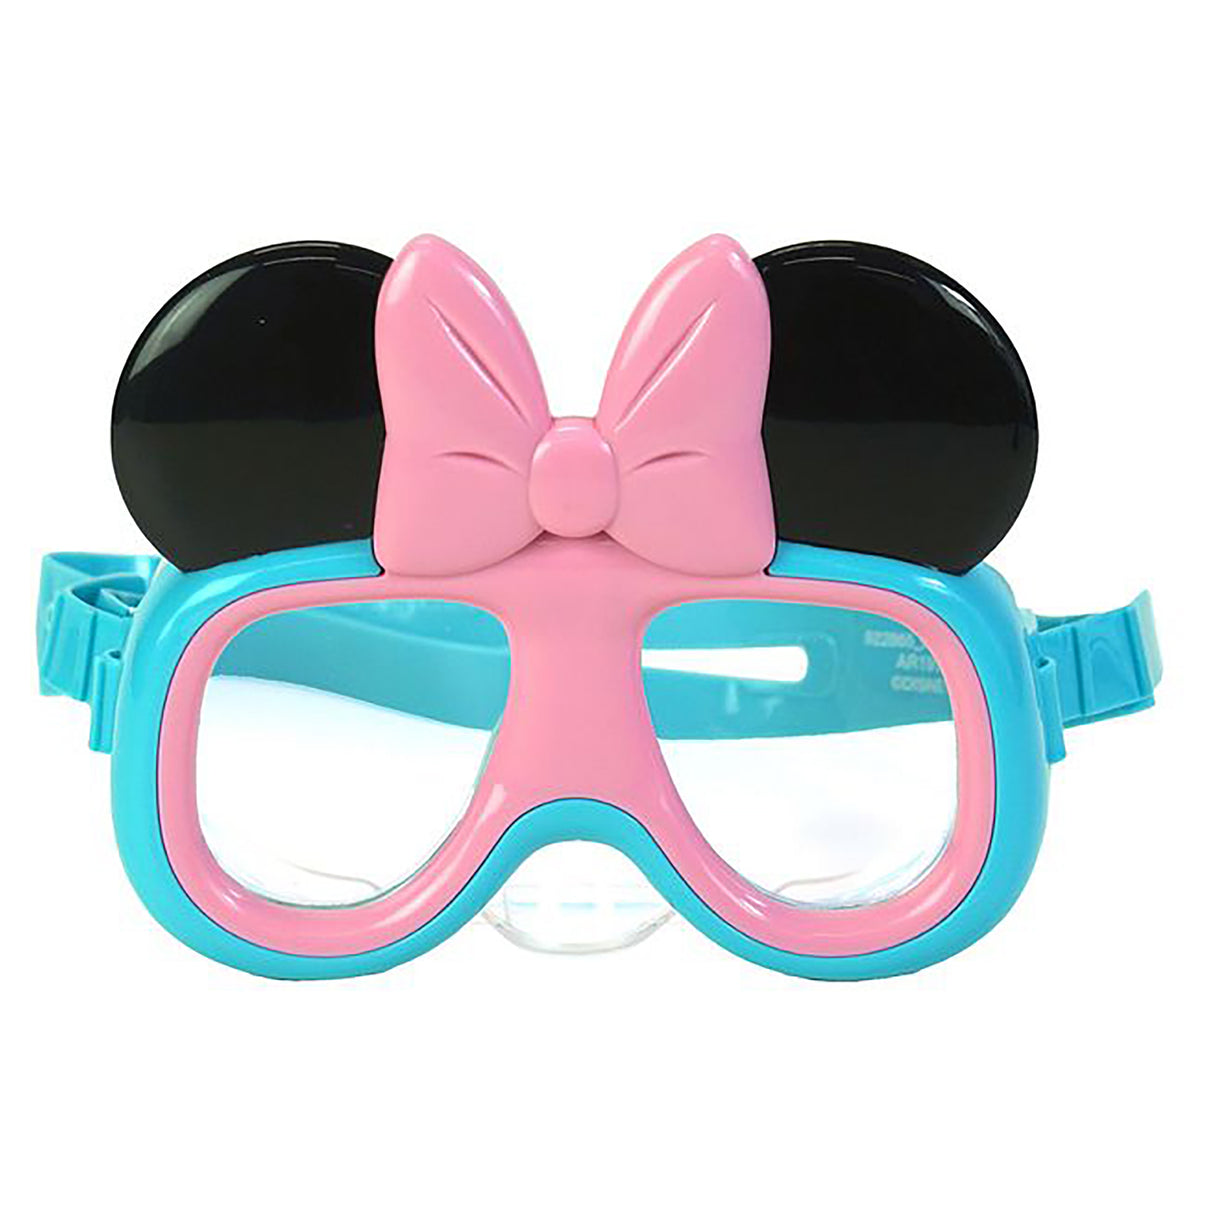 Wahu Minnie Mouse Swim Mask Goggles